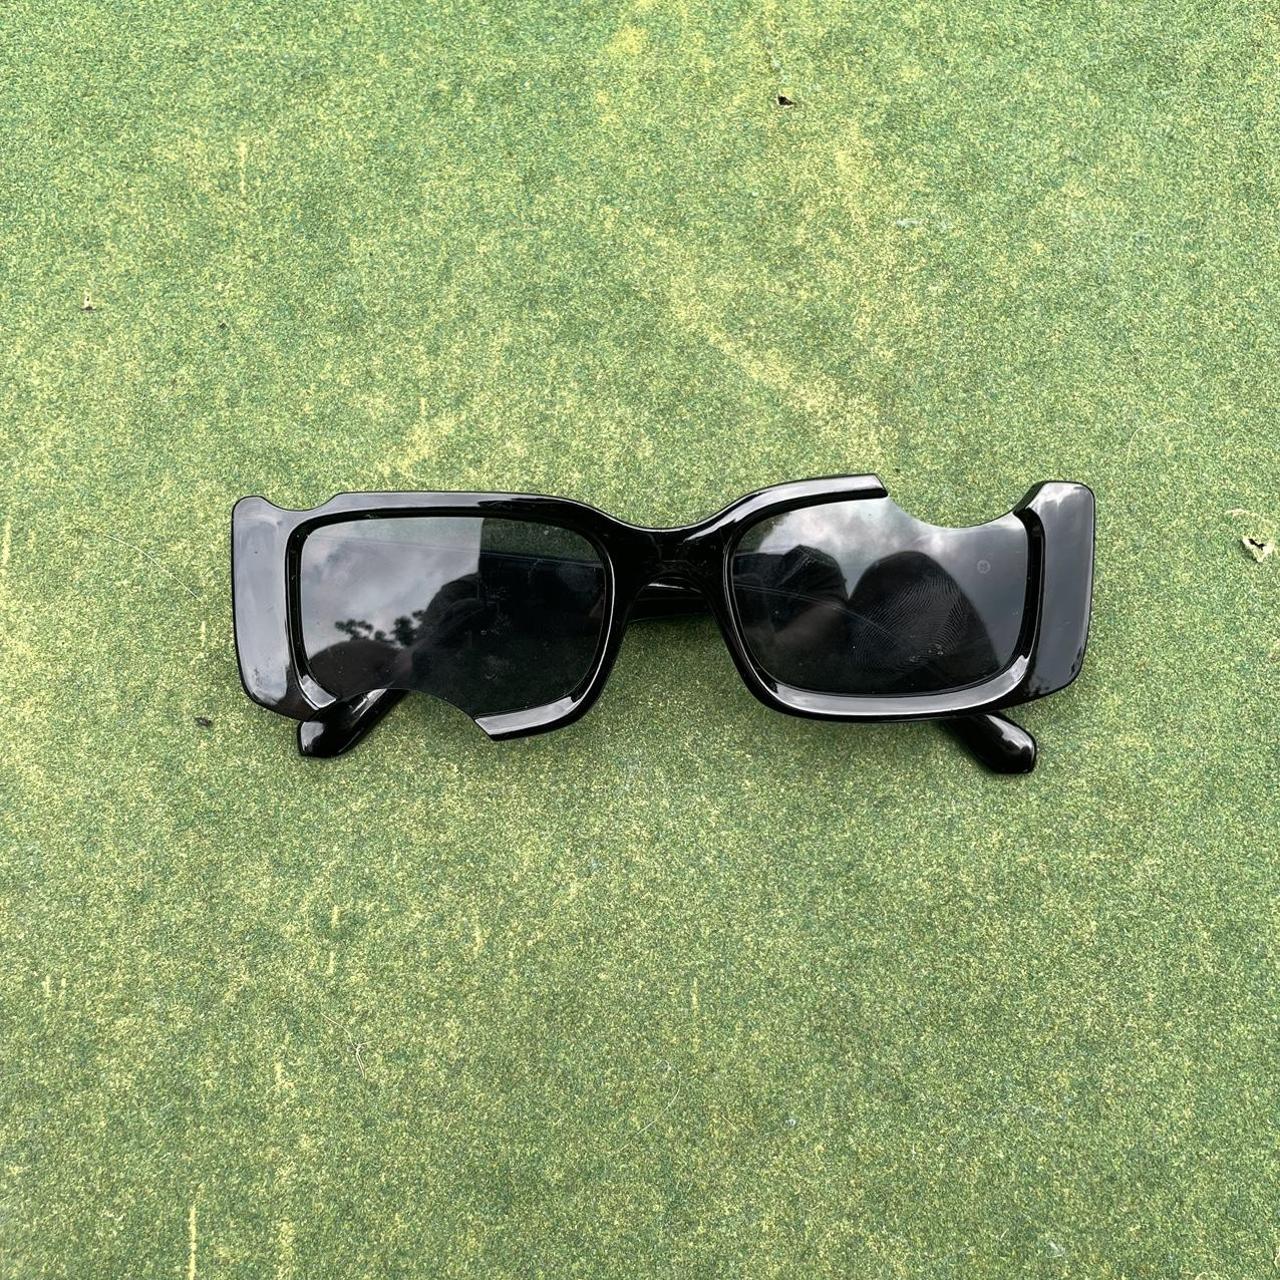 Men's Black and White Sunglasses OFF WHITE - Depop